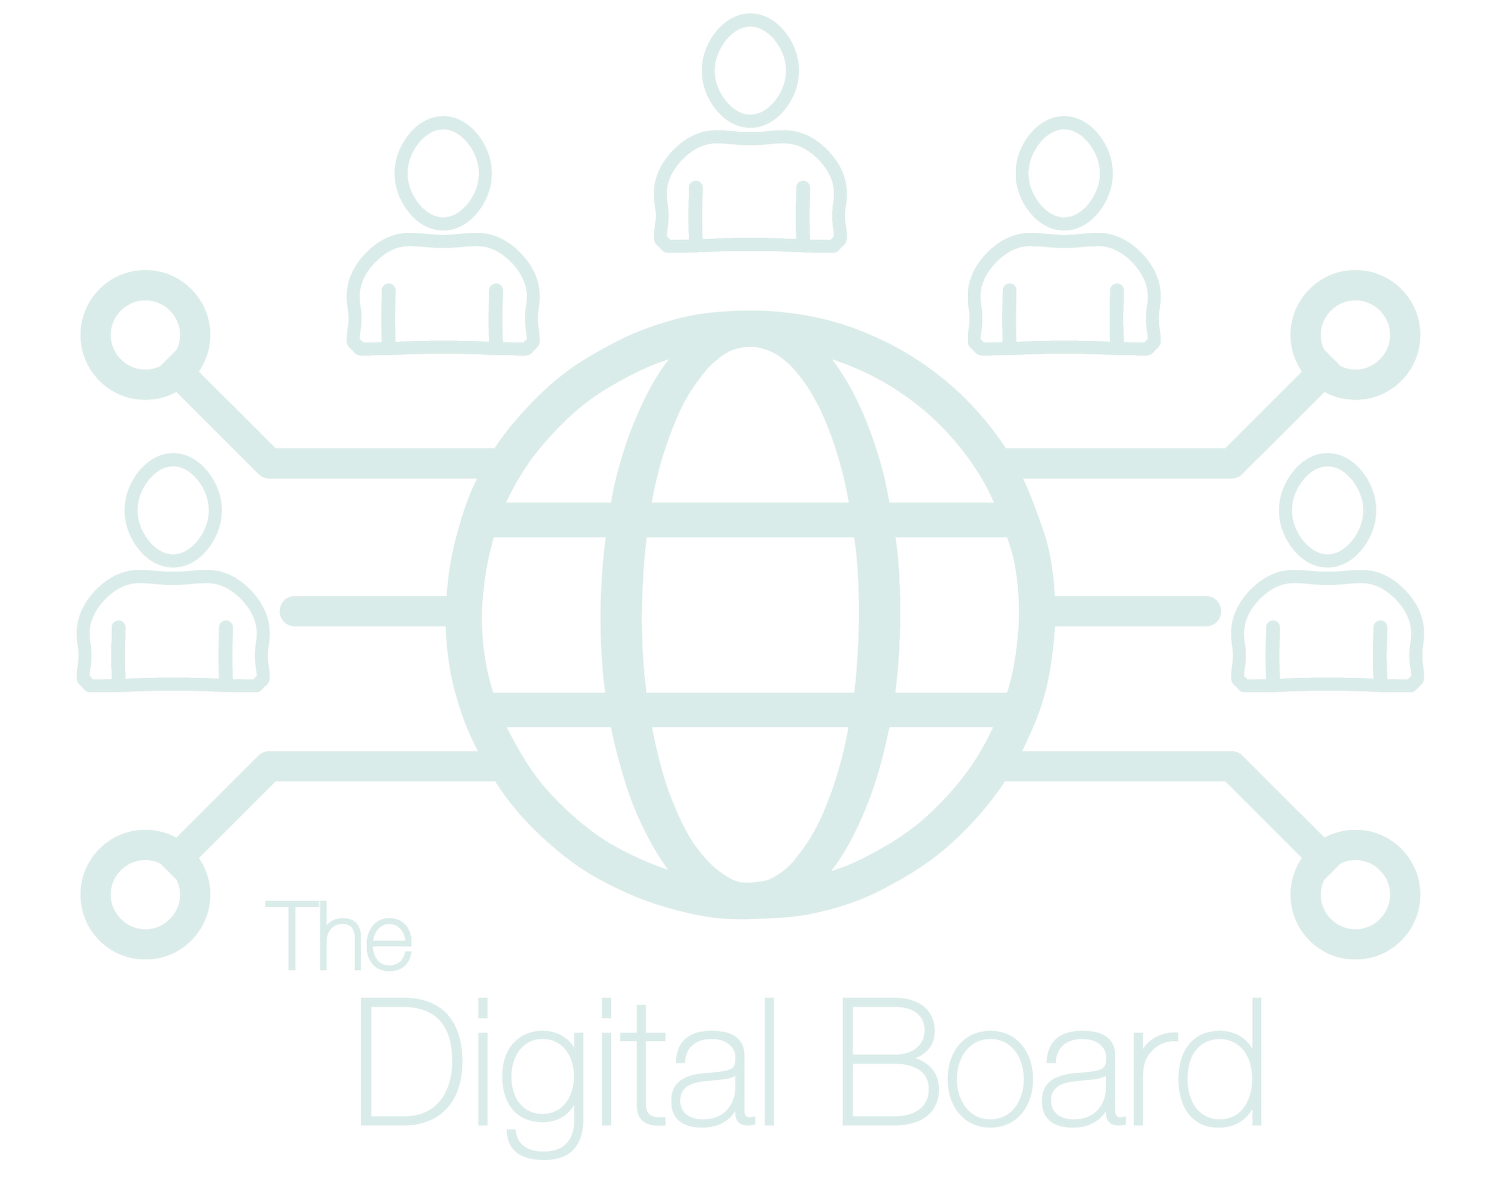 The Digital Board